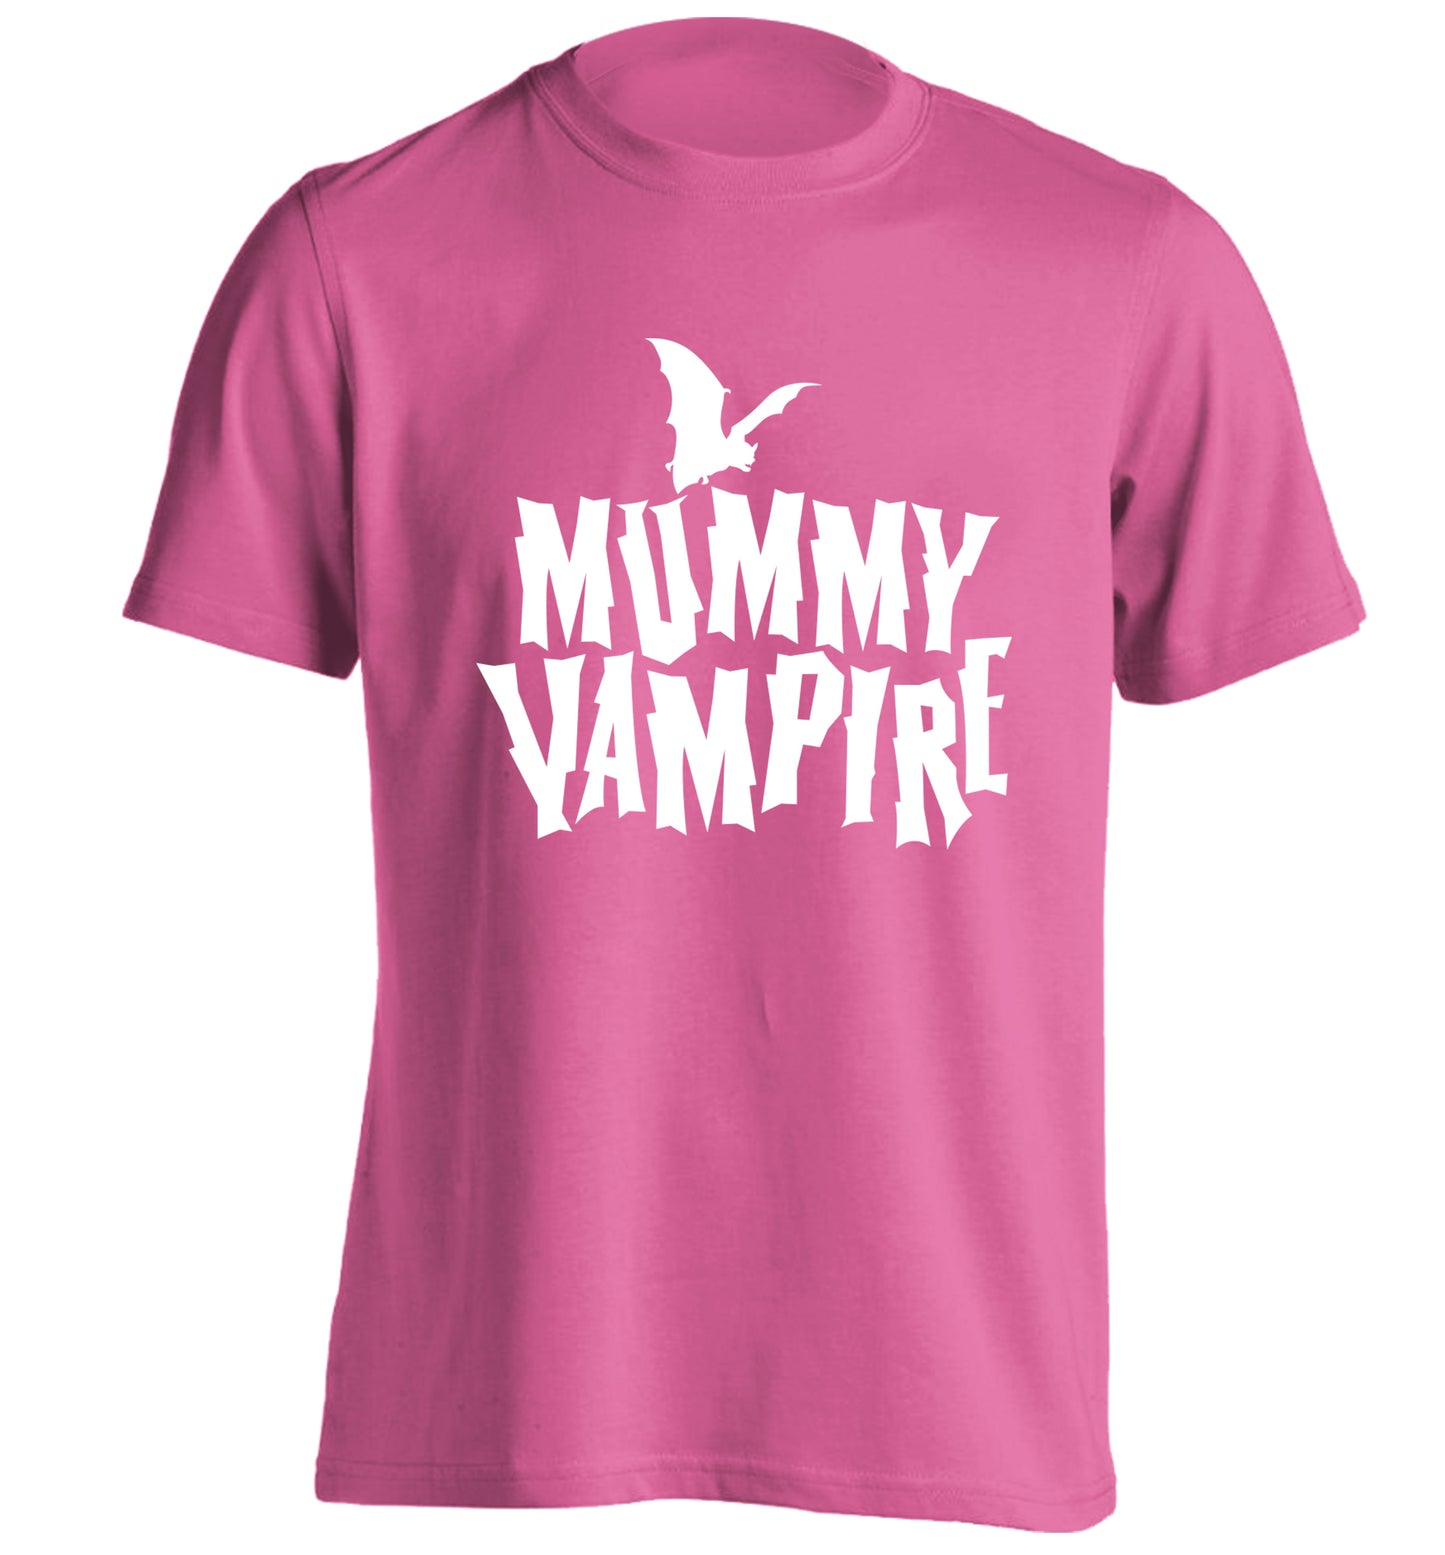 Mummy vampire adults unisex pink Tshirt 2XL